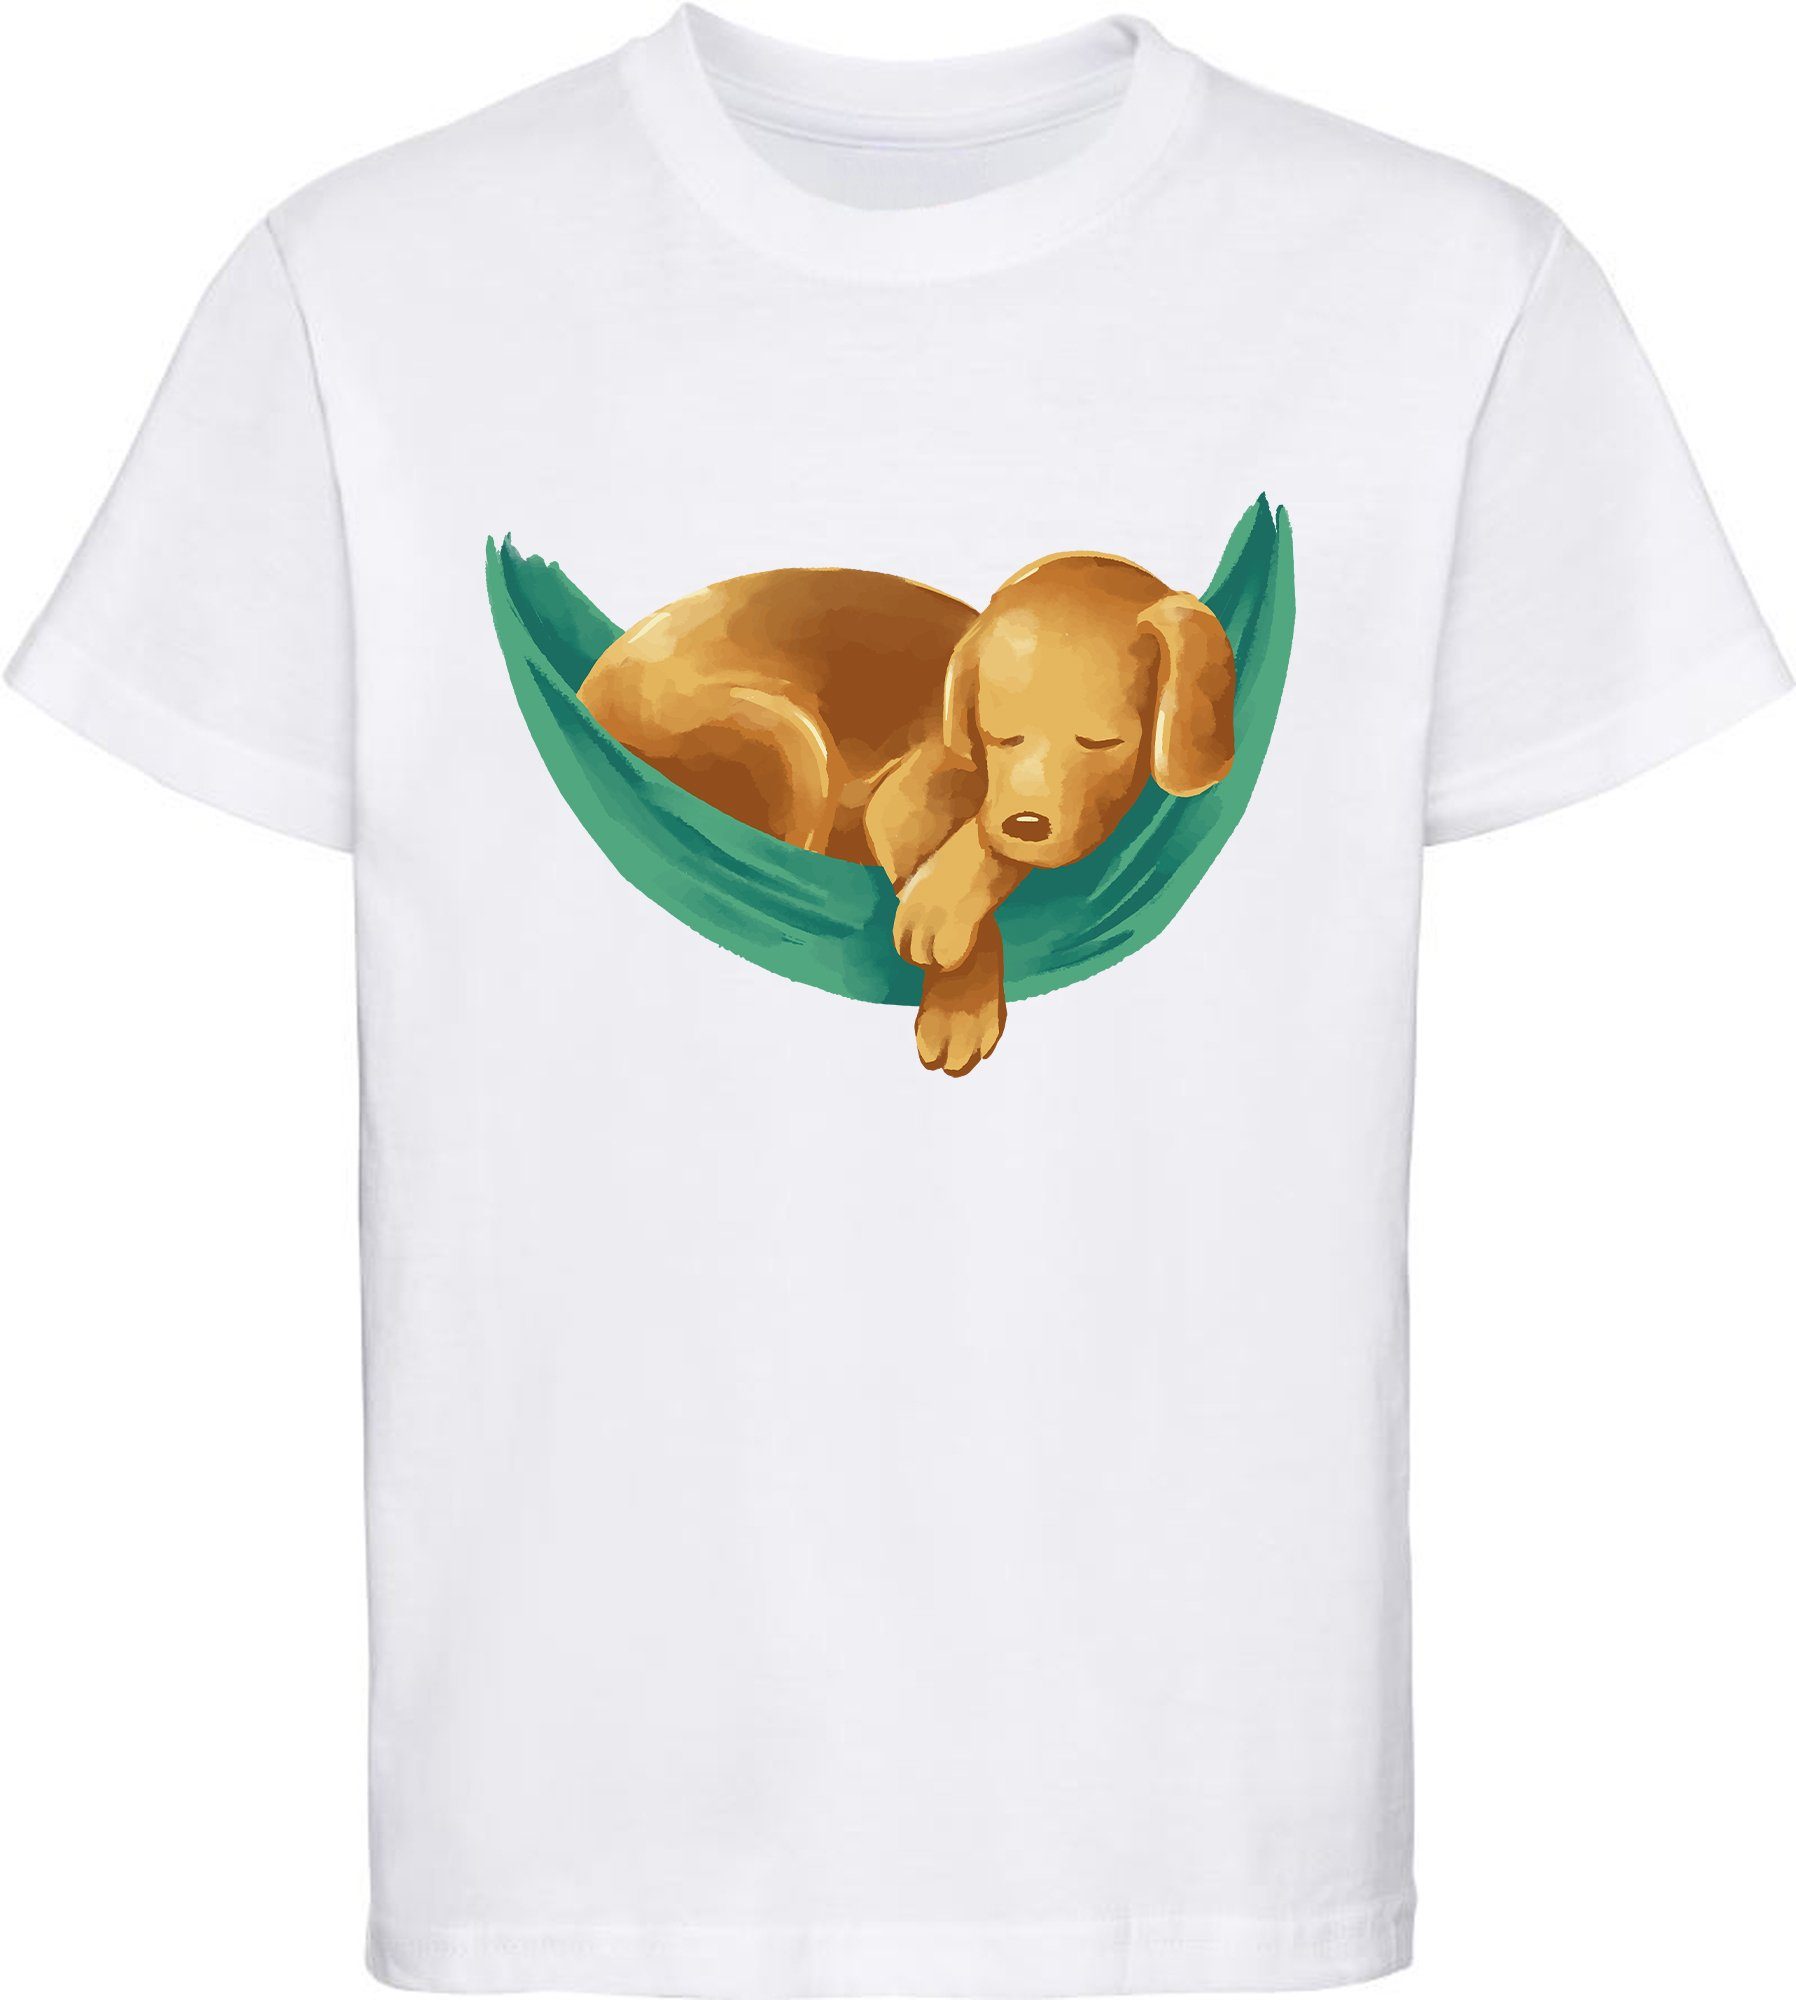 MyDesign24 T-Shirt Kinder Hunde Print Shirt bedruckt - Labrador Welpe in Hängematte Baumwollshirt mit Aufdruck, i245 weiss